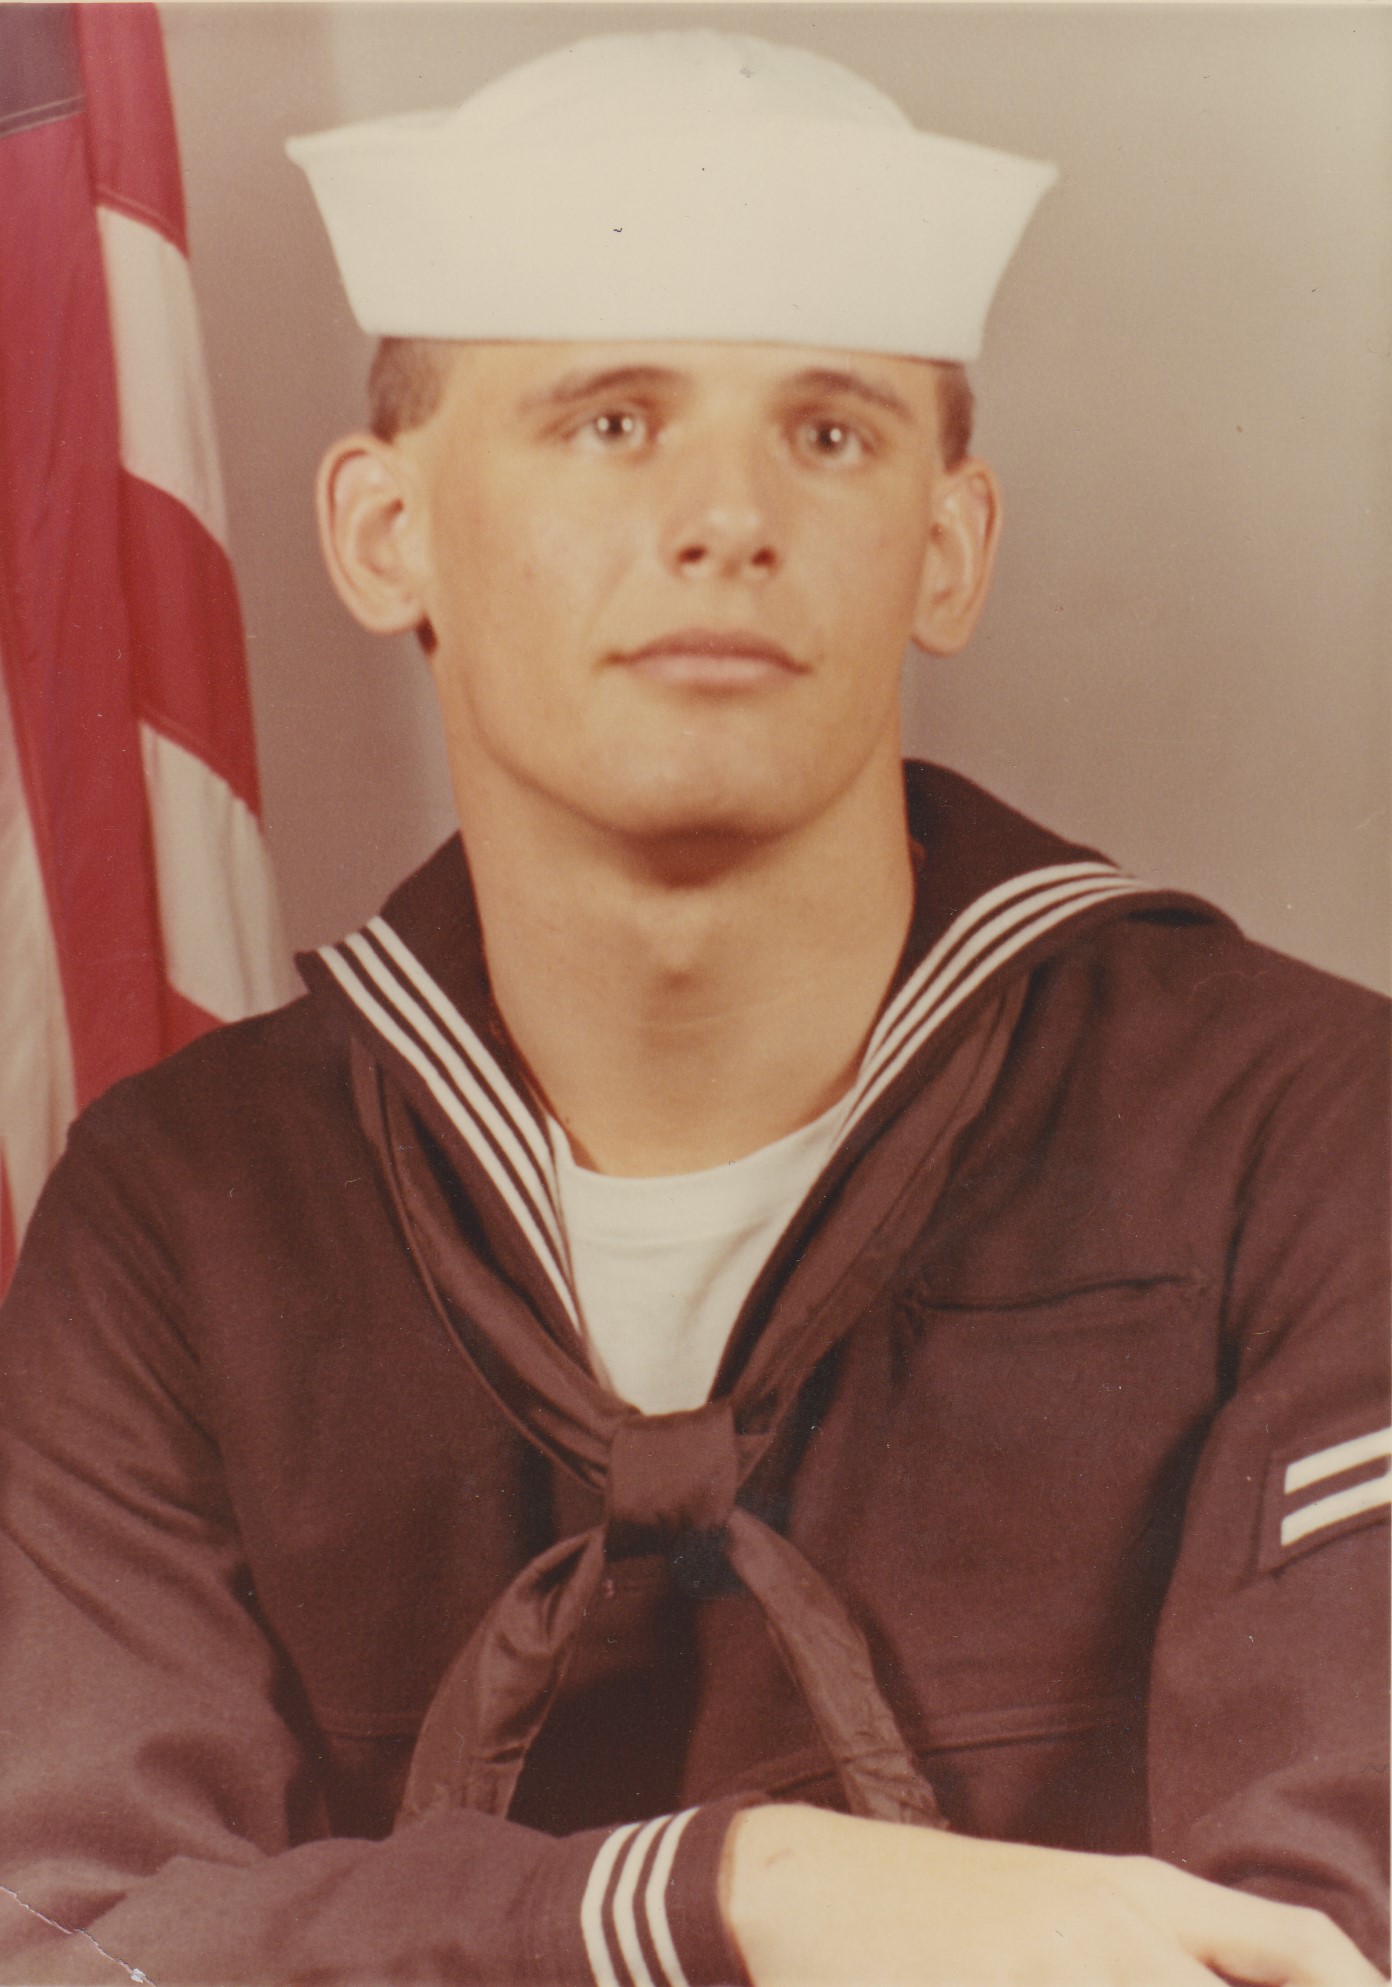 Navy sailor in uniform